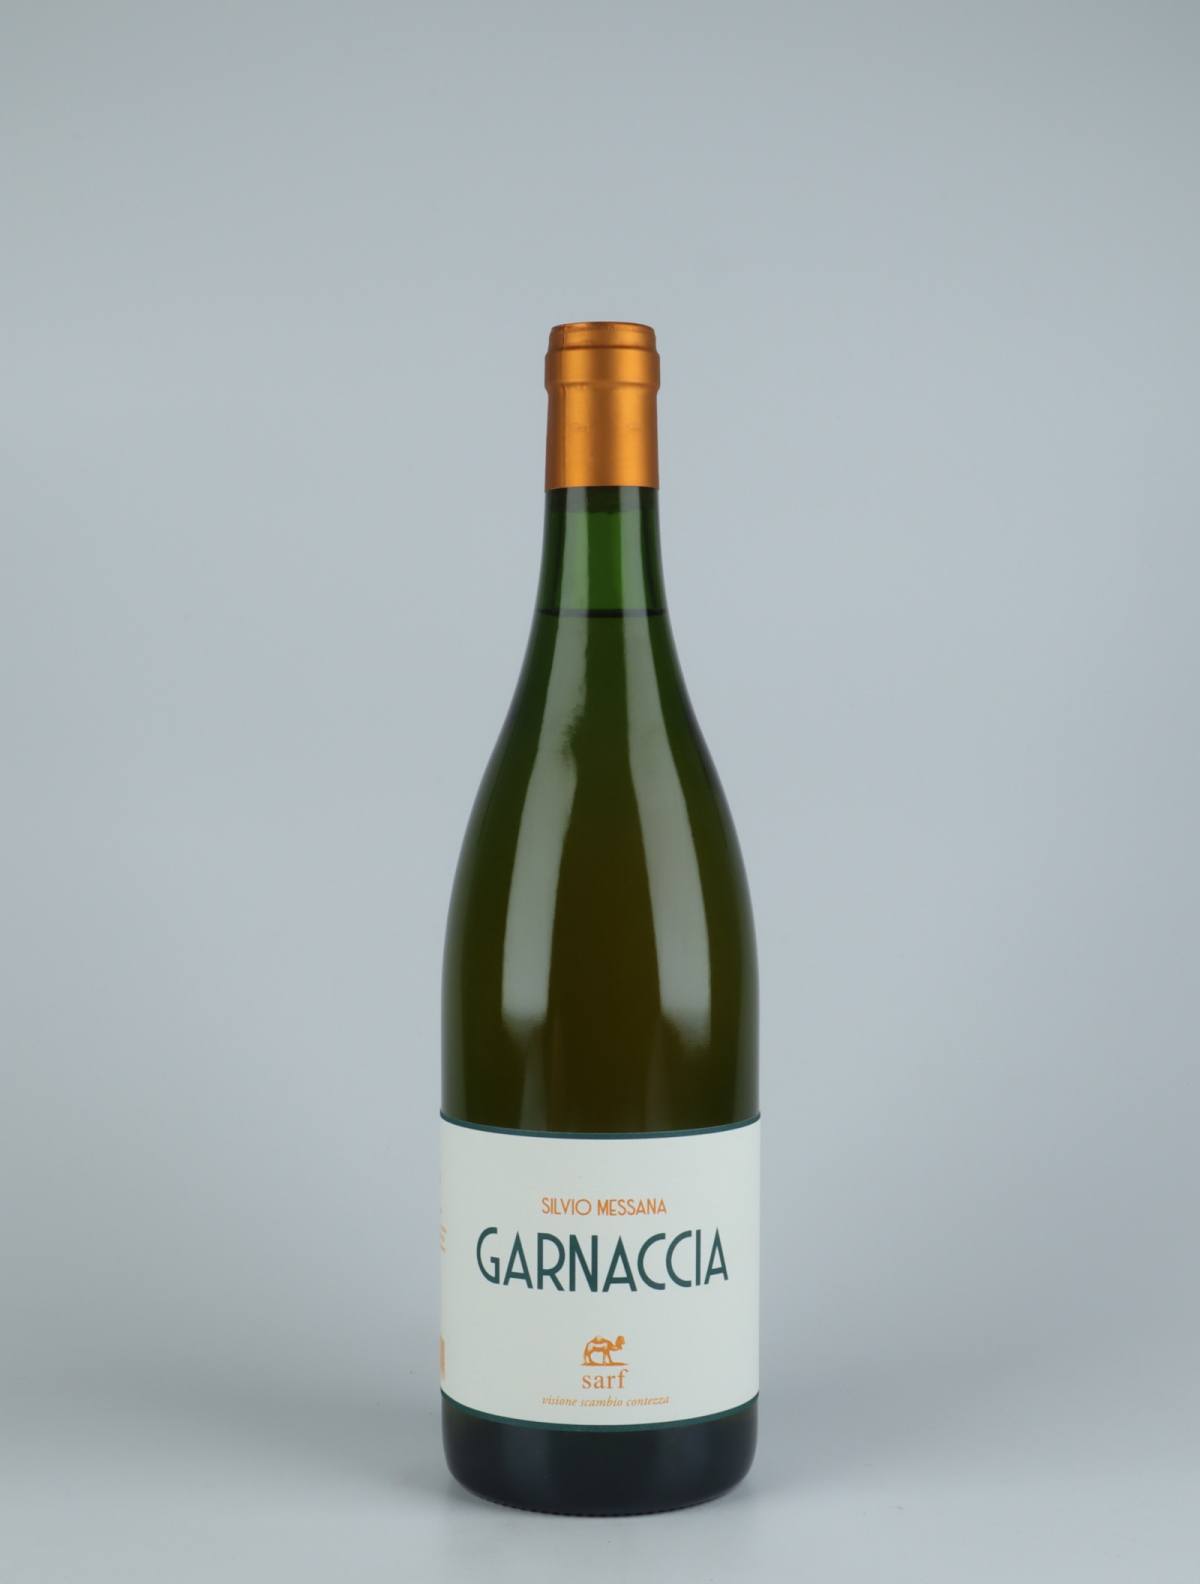 En flaske 2019 Garnaccia Orange vin fra Silvio Messana, Toscana i Italien